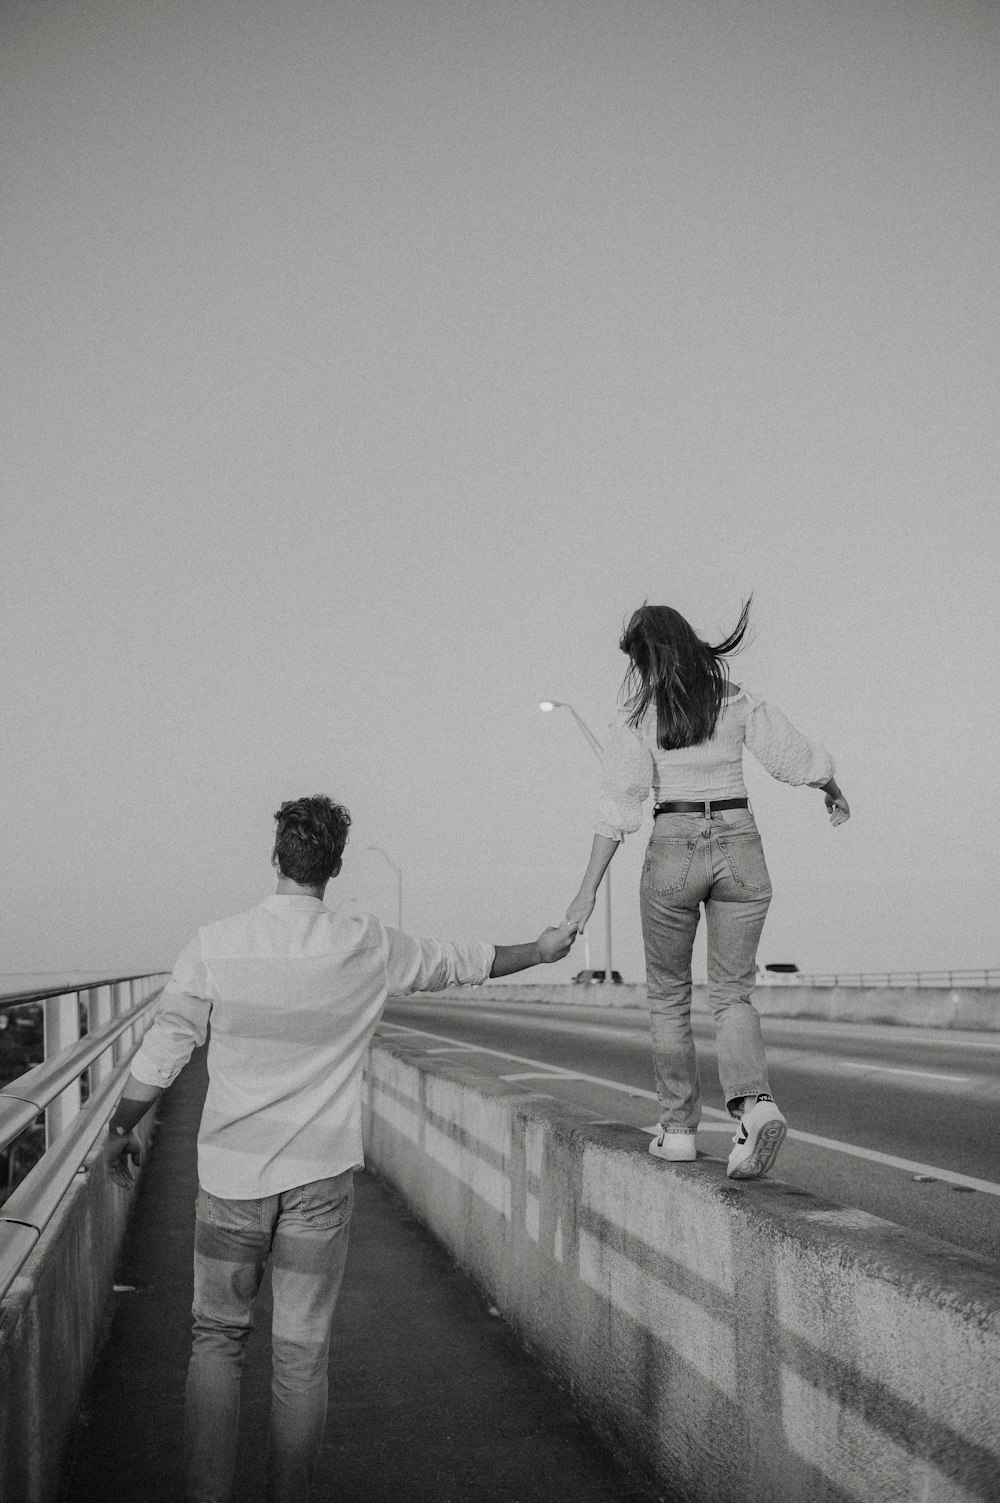 a man and a woman walking on a bridge